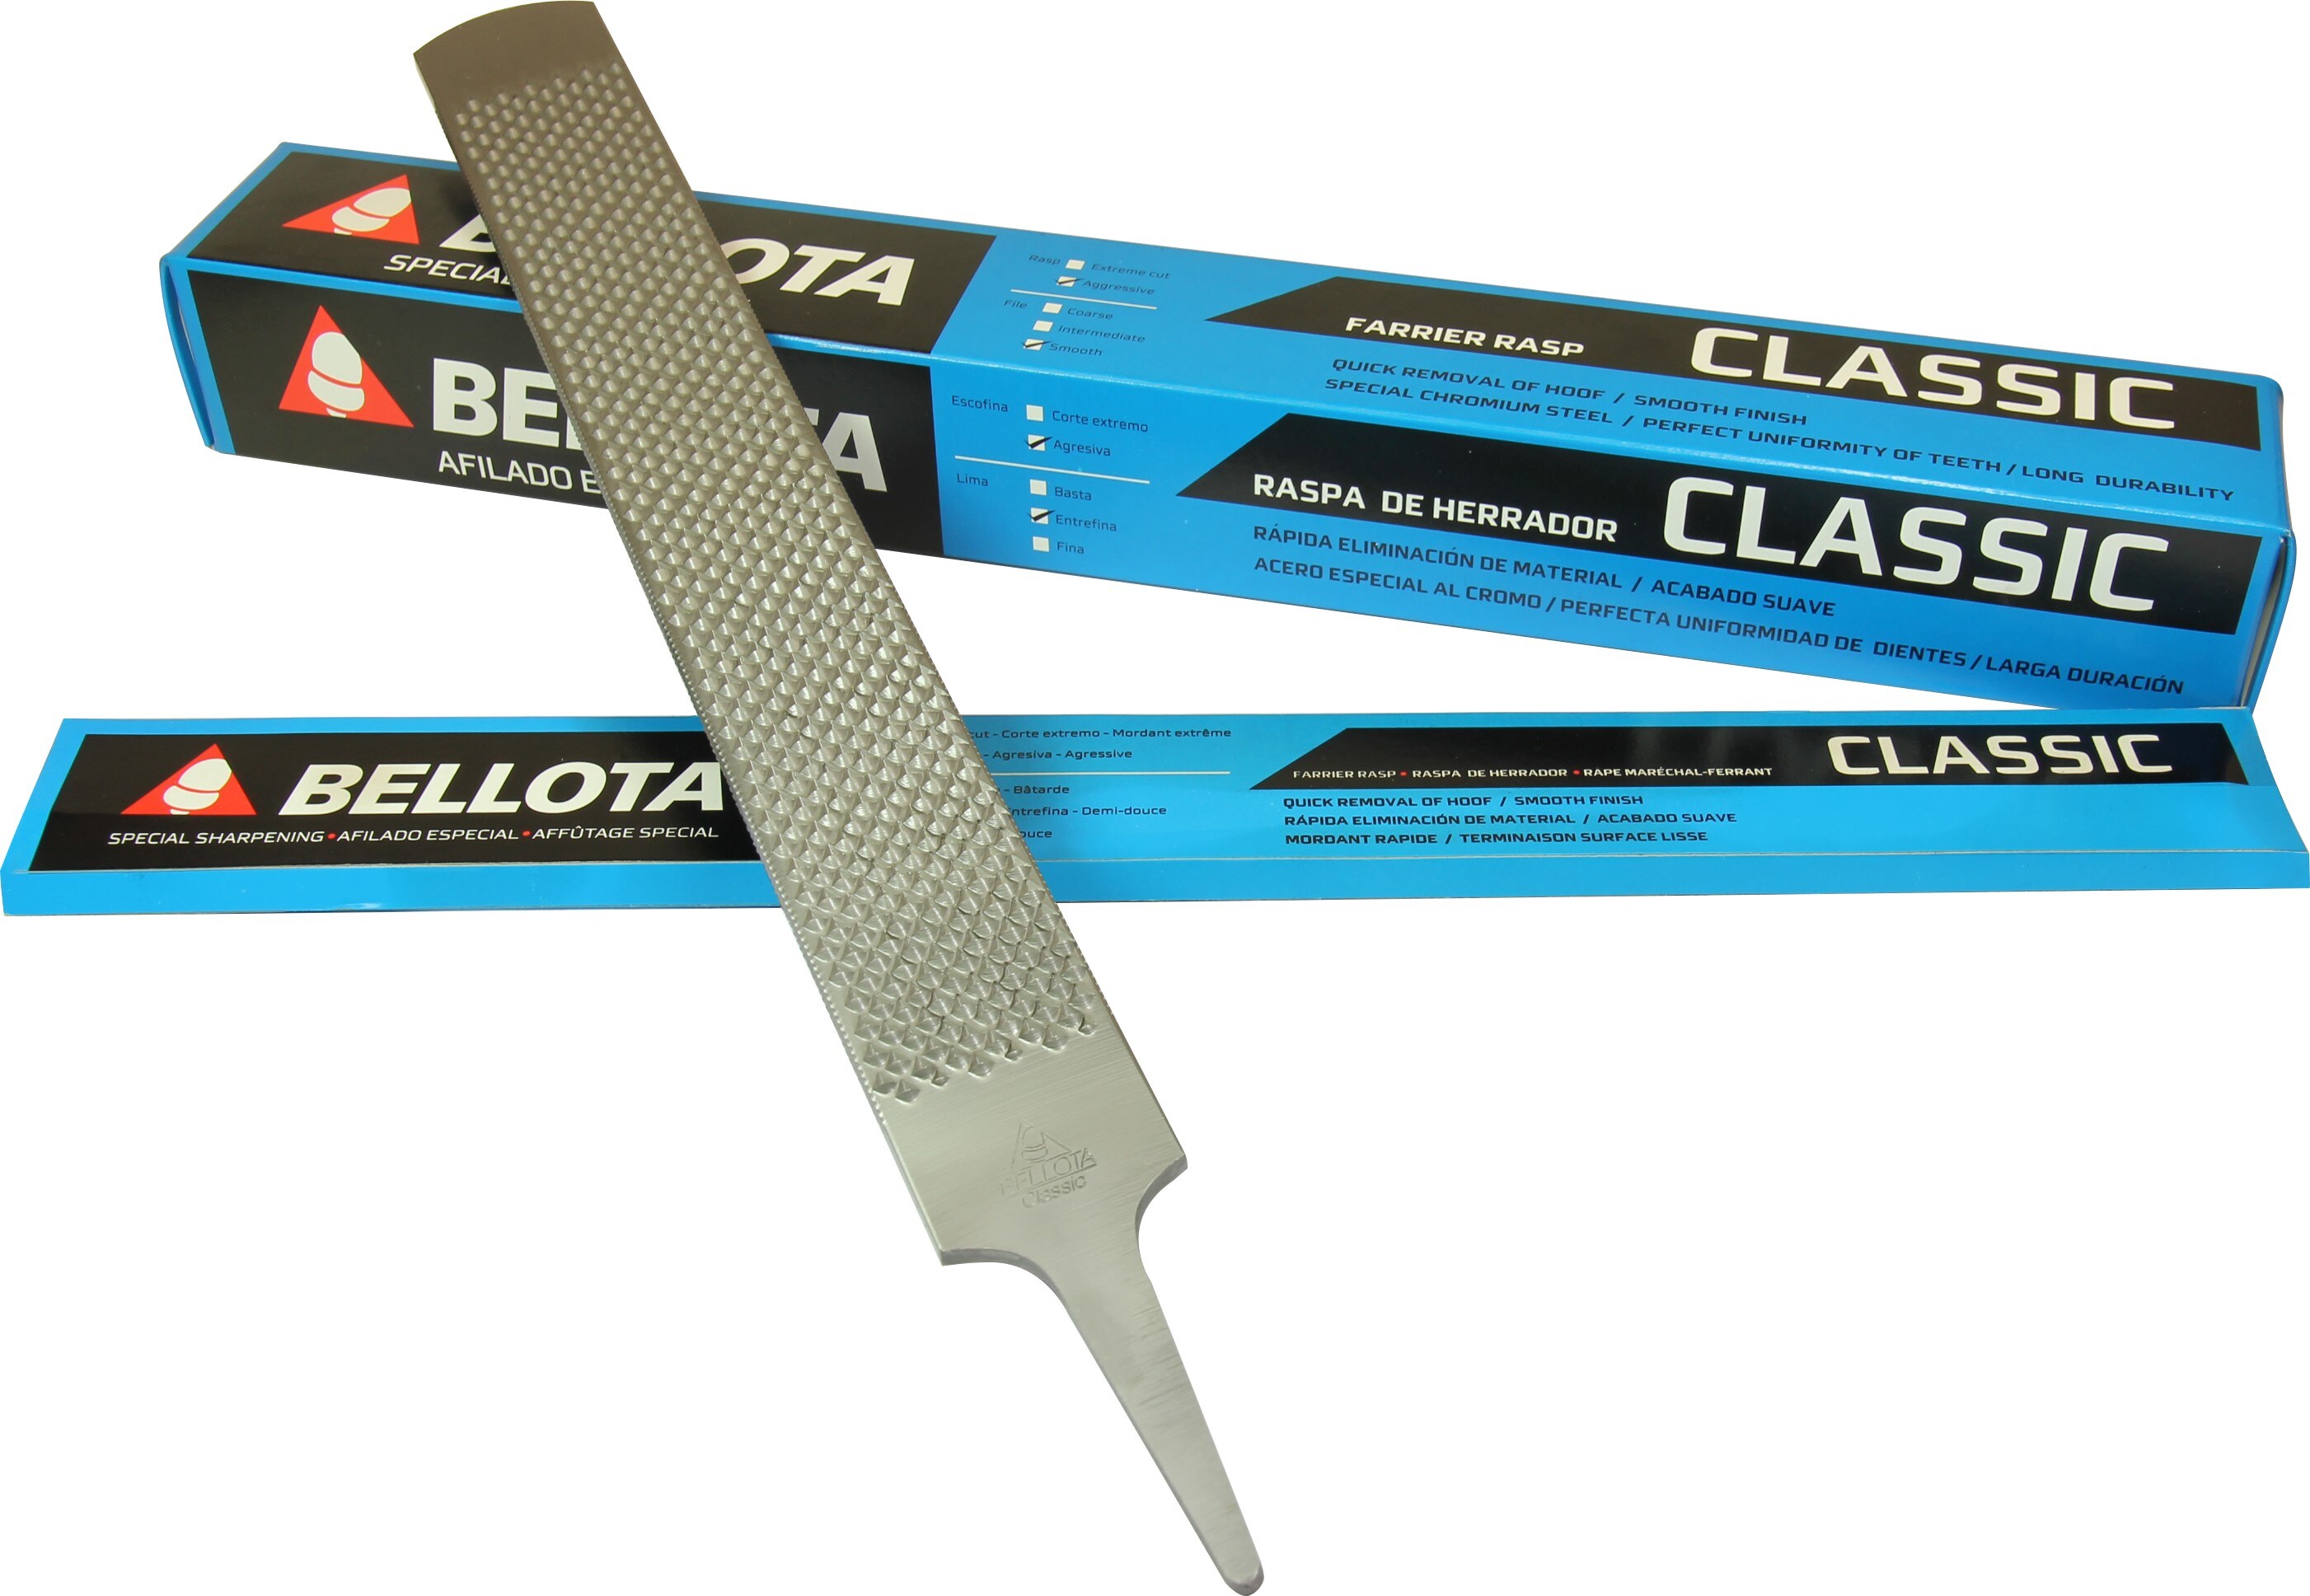 Bellota Classic rasp